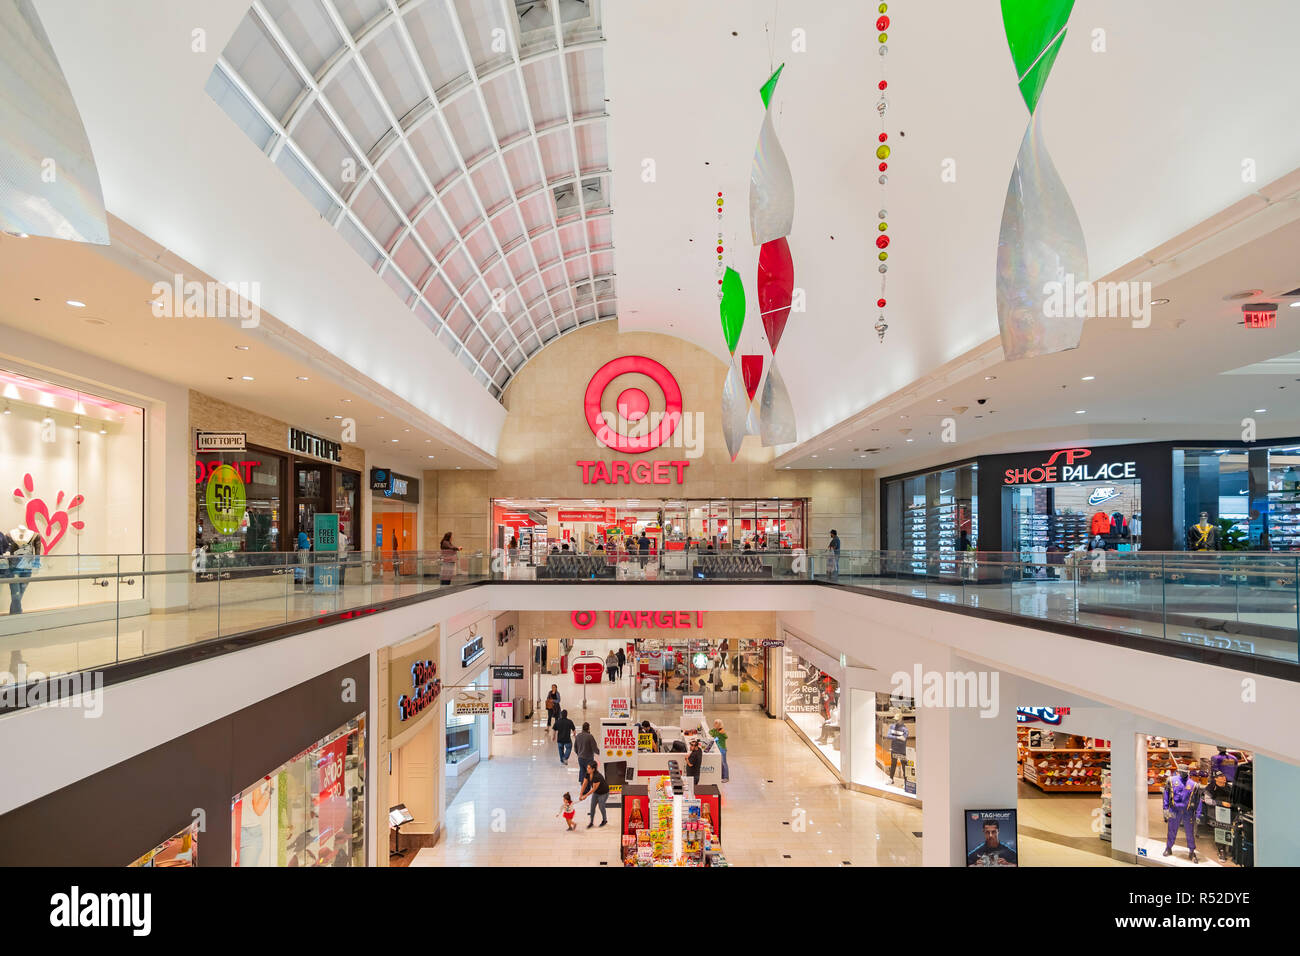 A Christmas scene in Robinsons Galleria shopping mall, Cebu City